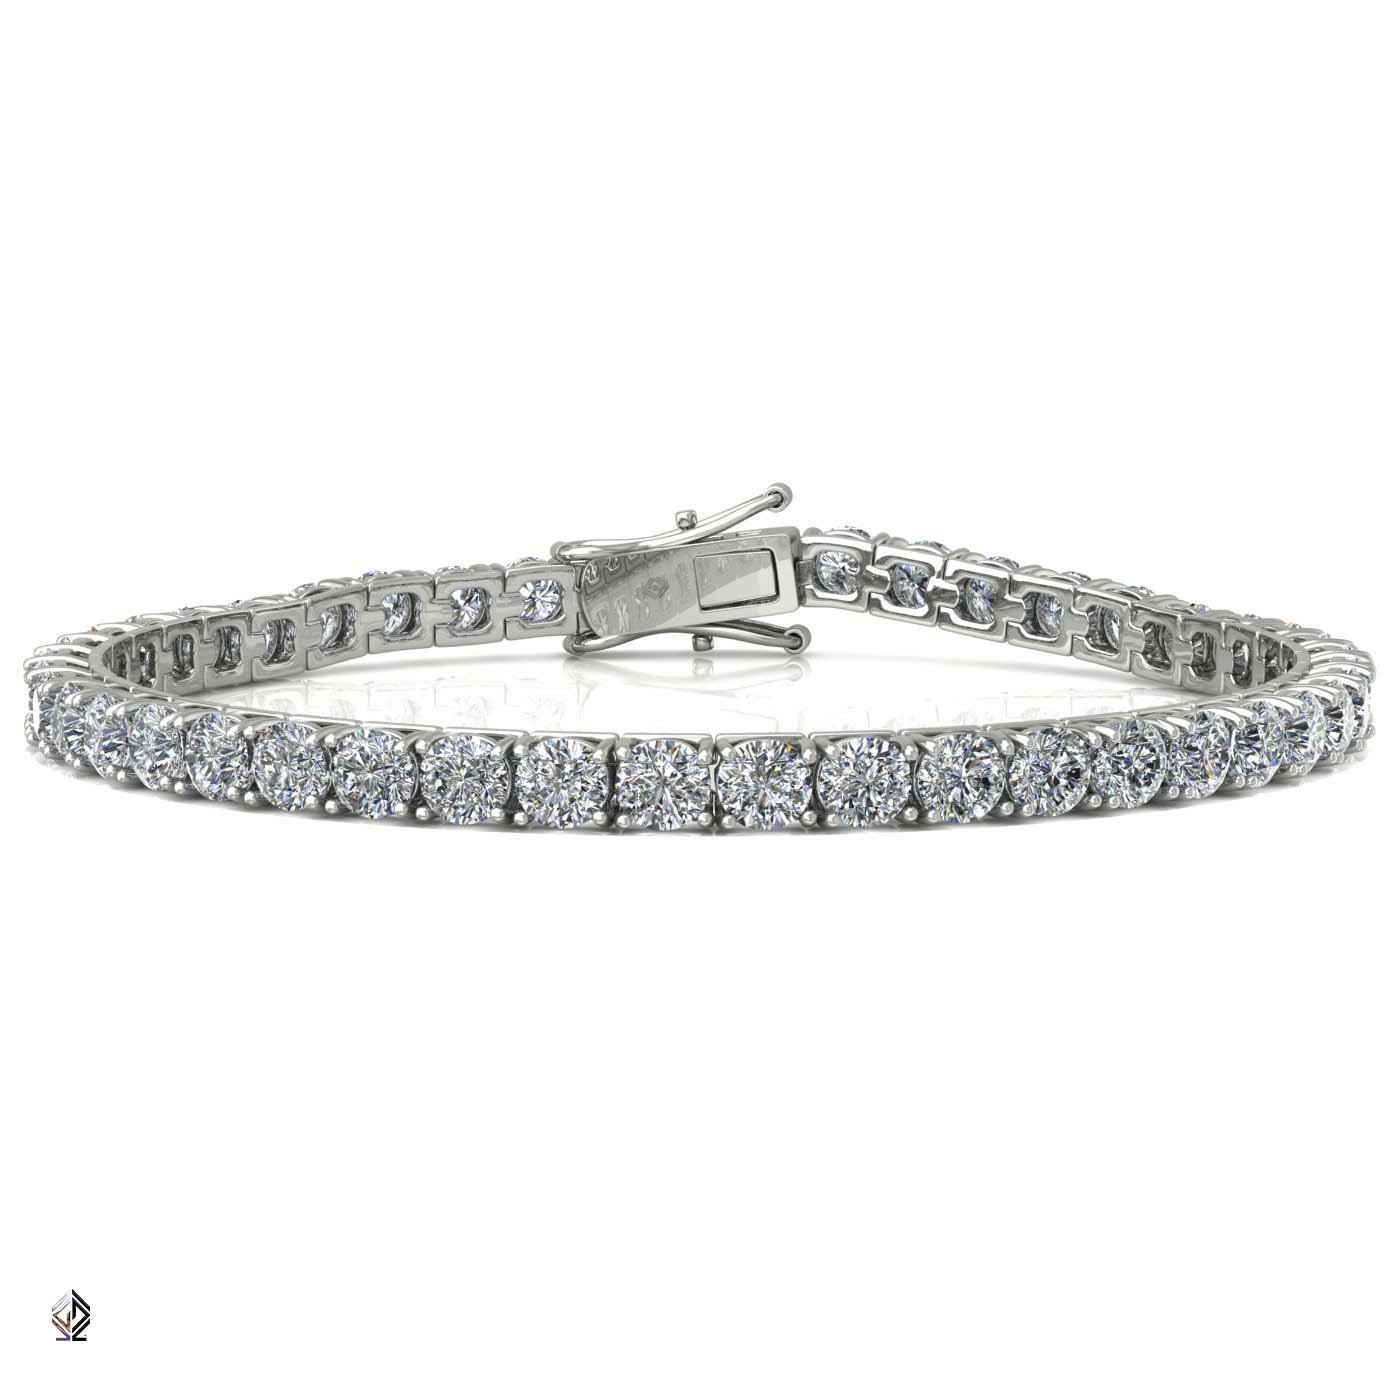 18k white gold 3.8mm 4 prong round shape diamond tennis bracelet in square setting